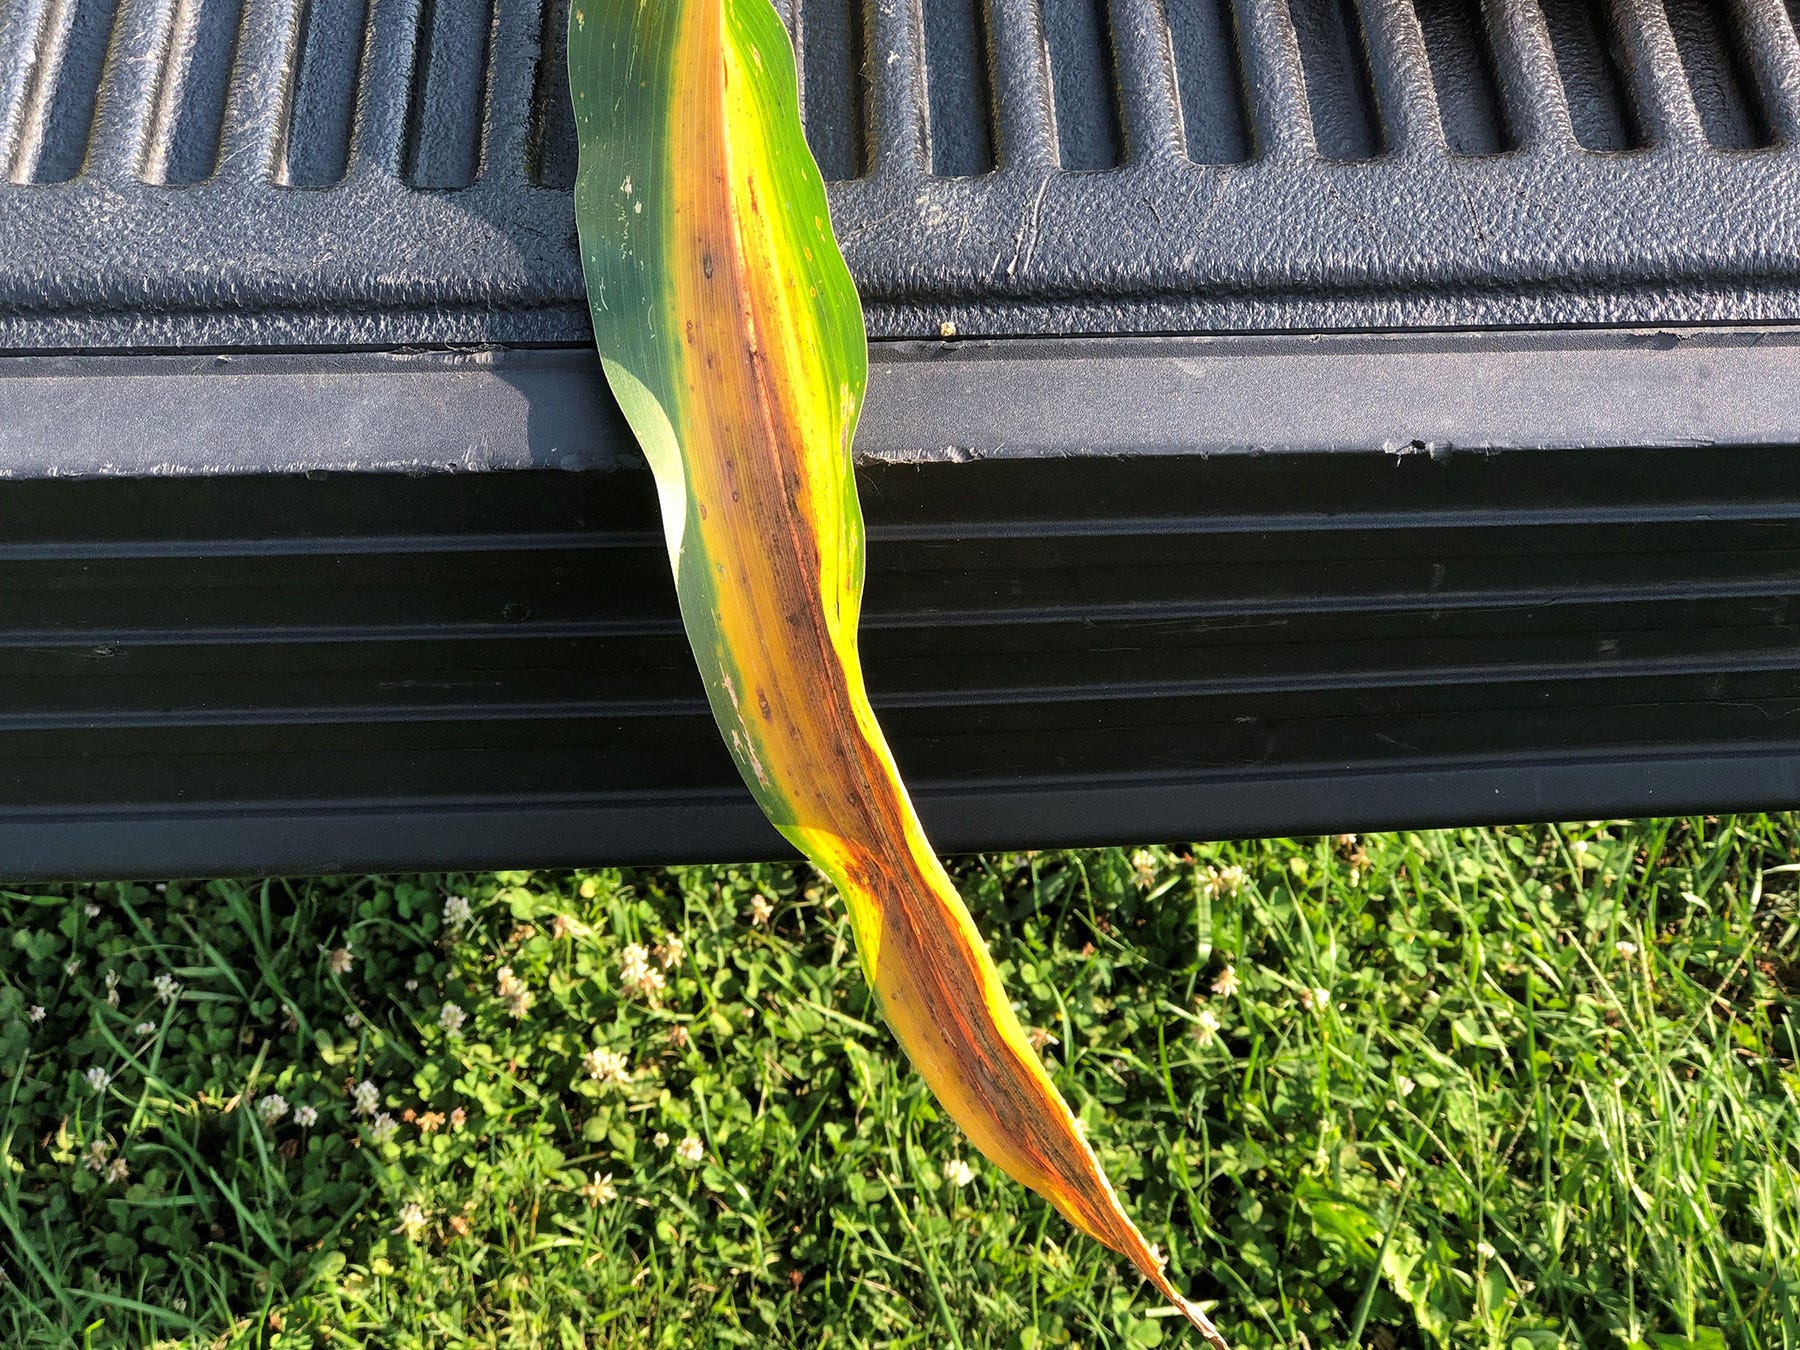 classic leaf firing symptoms on a corn leaf